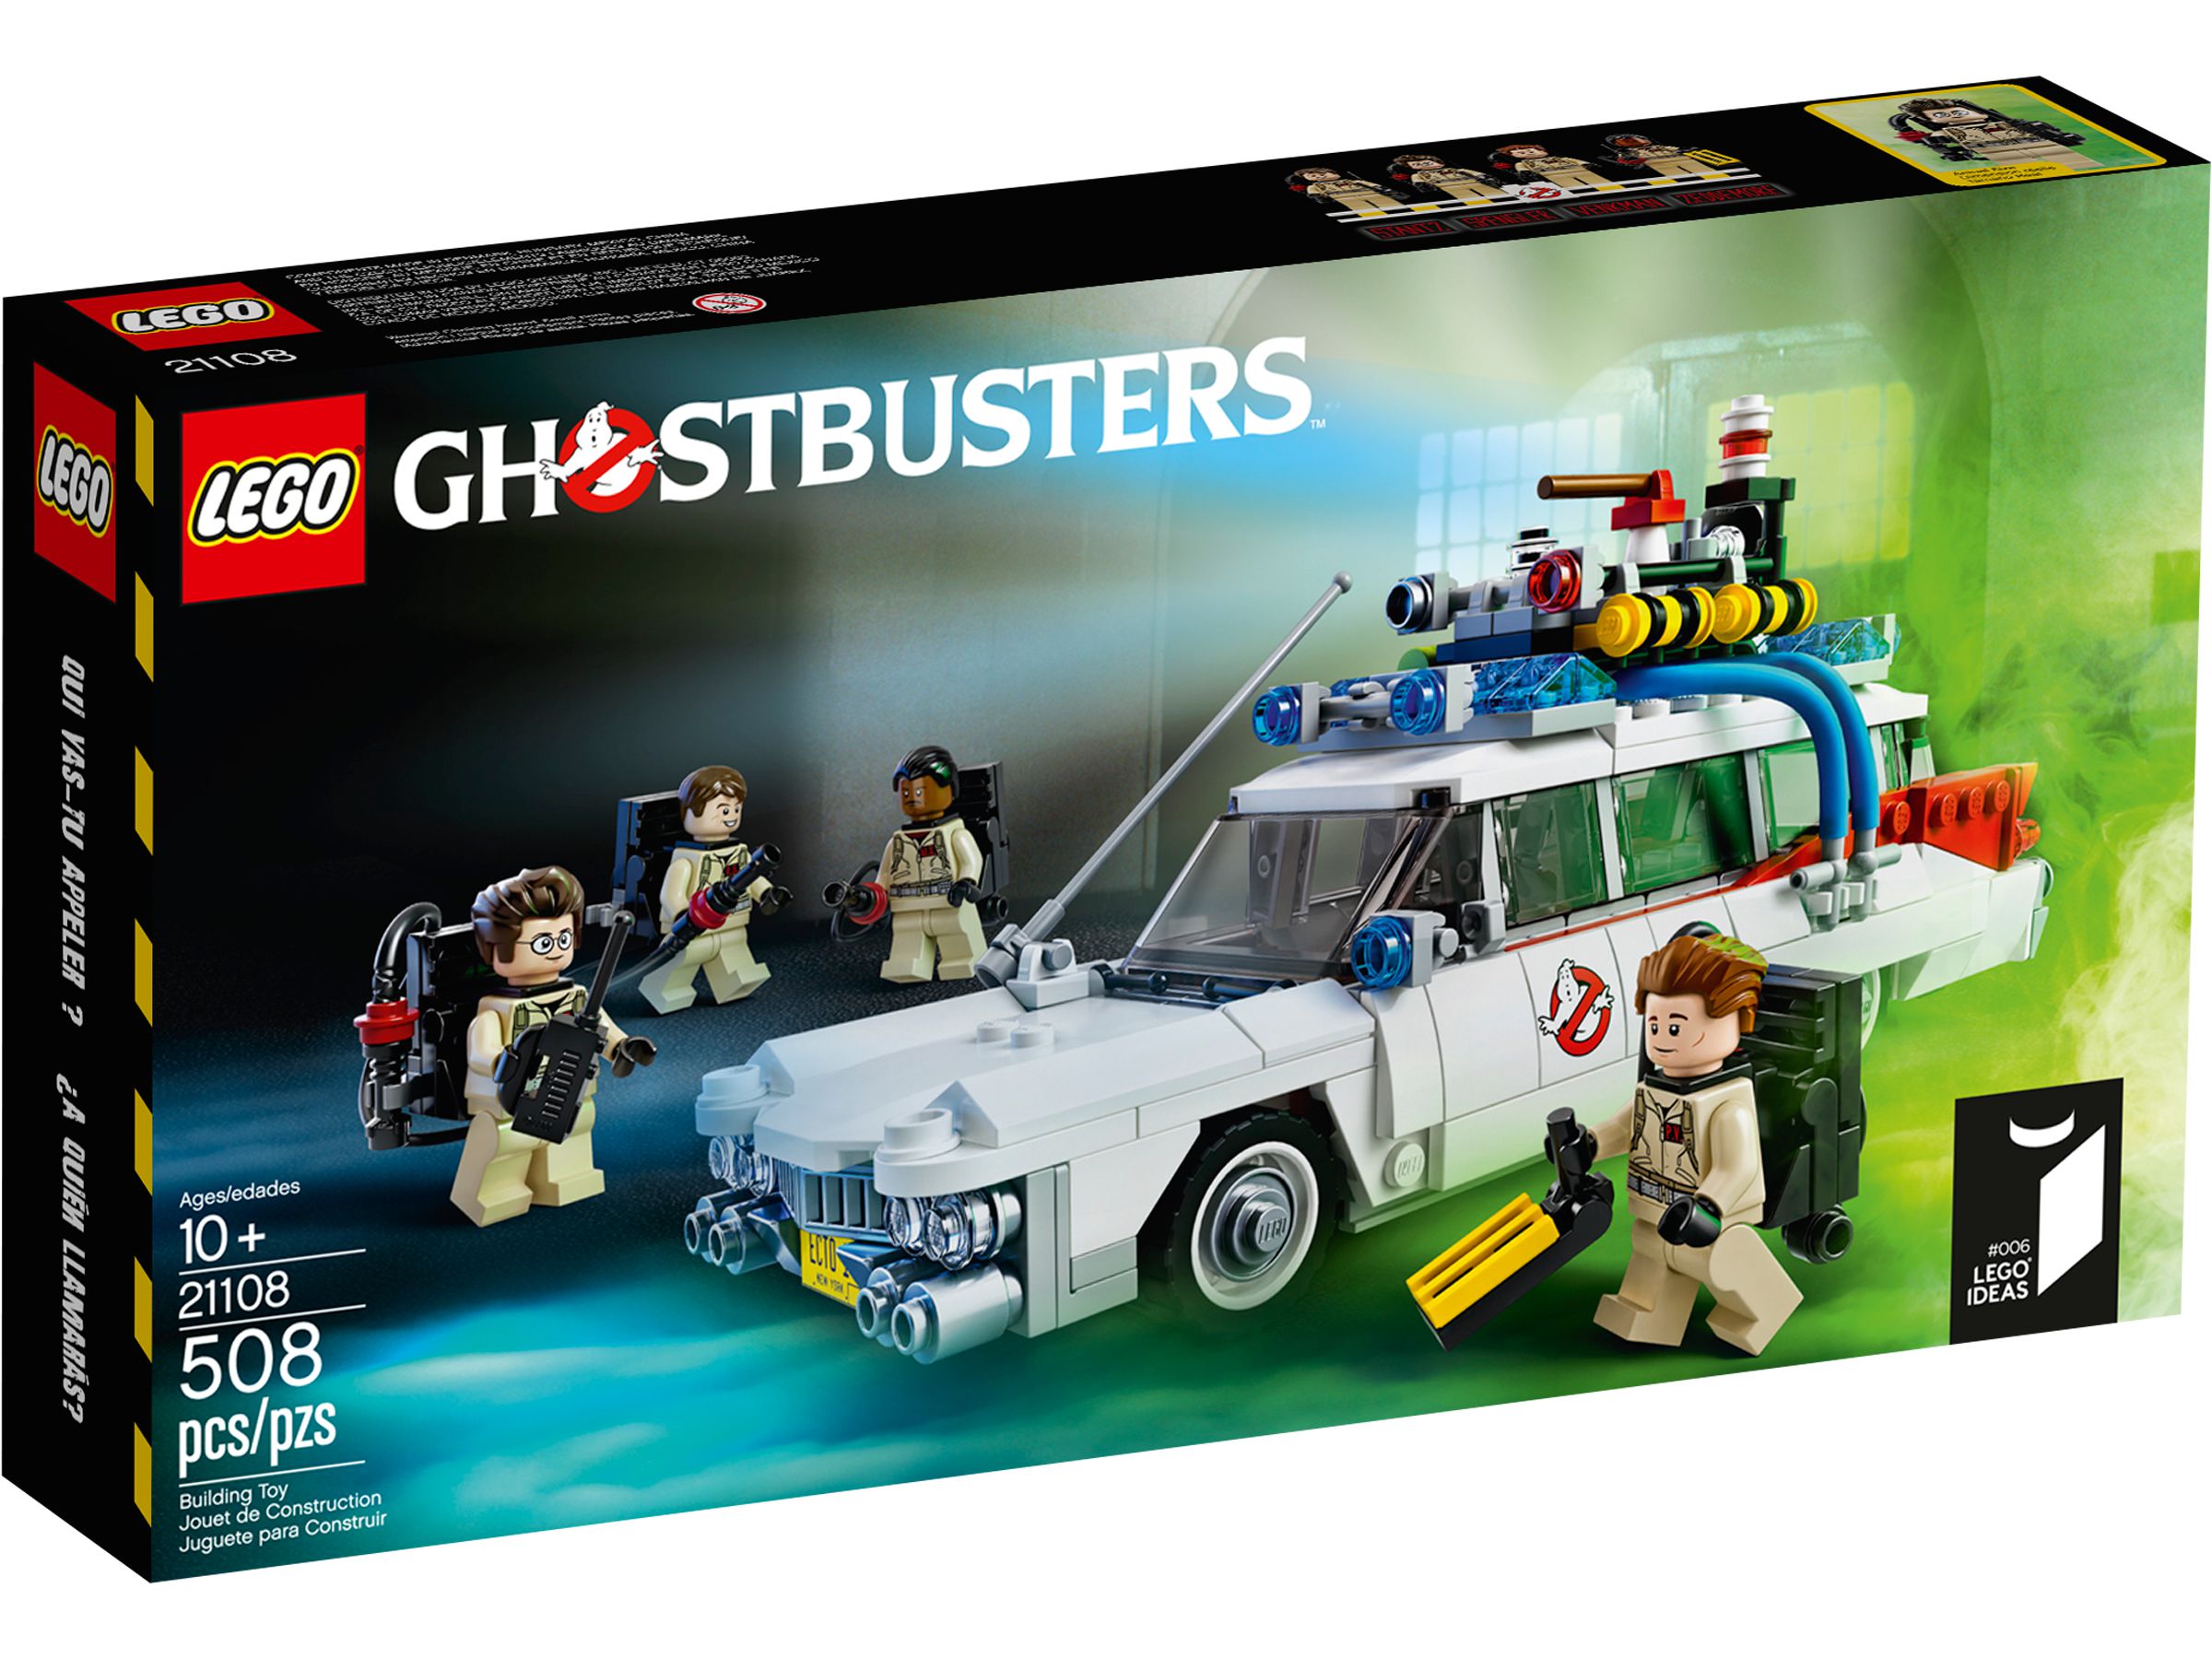 LEGO Ideas 21108 Ghostbusters™ Ecto-1 LEGO_21108_alt1.jpg